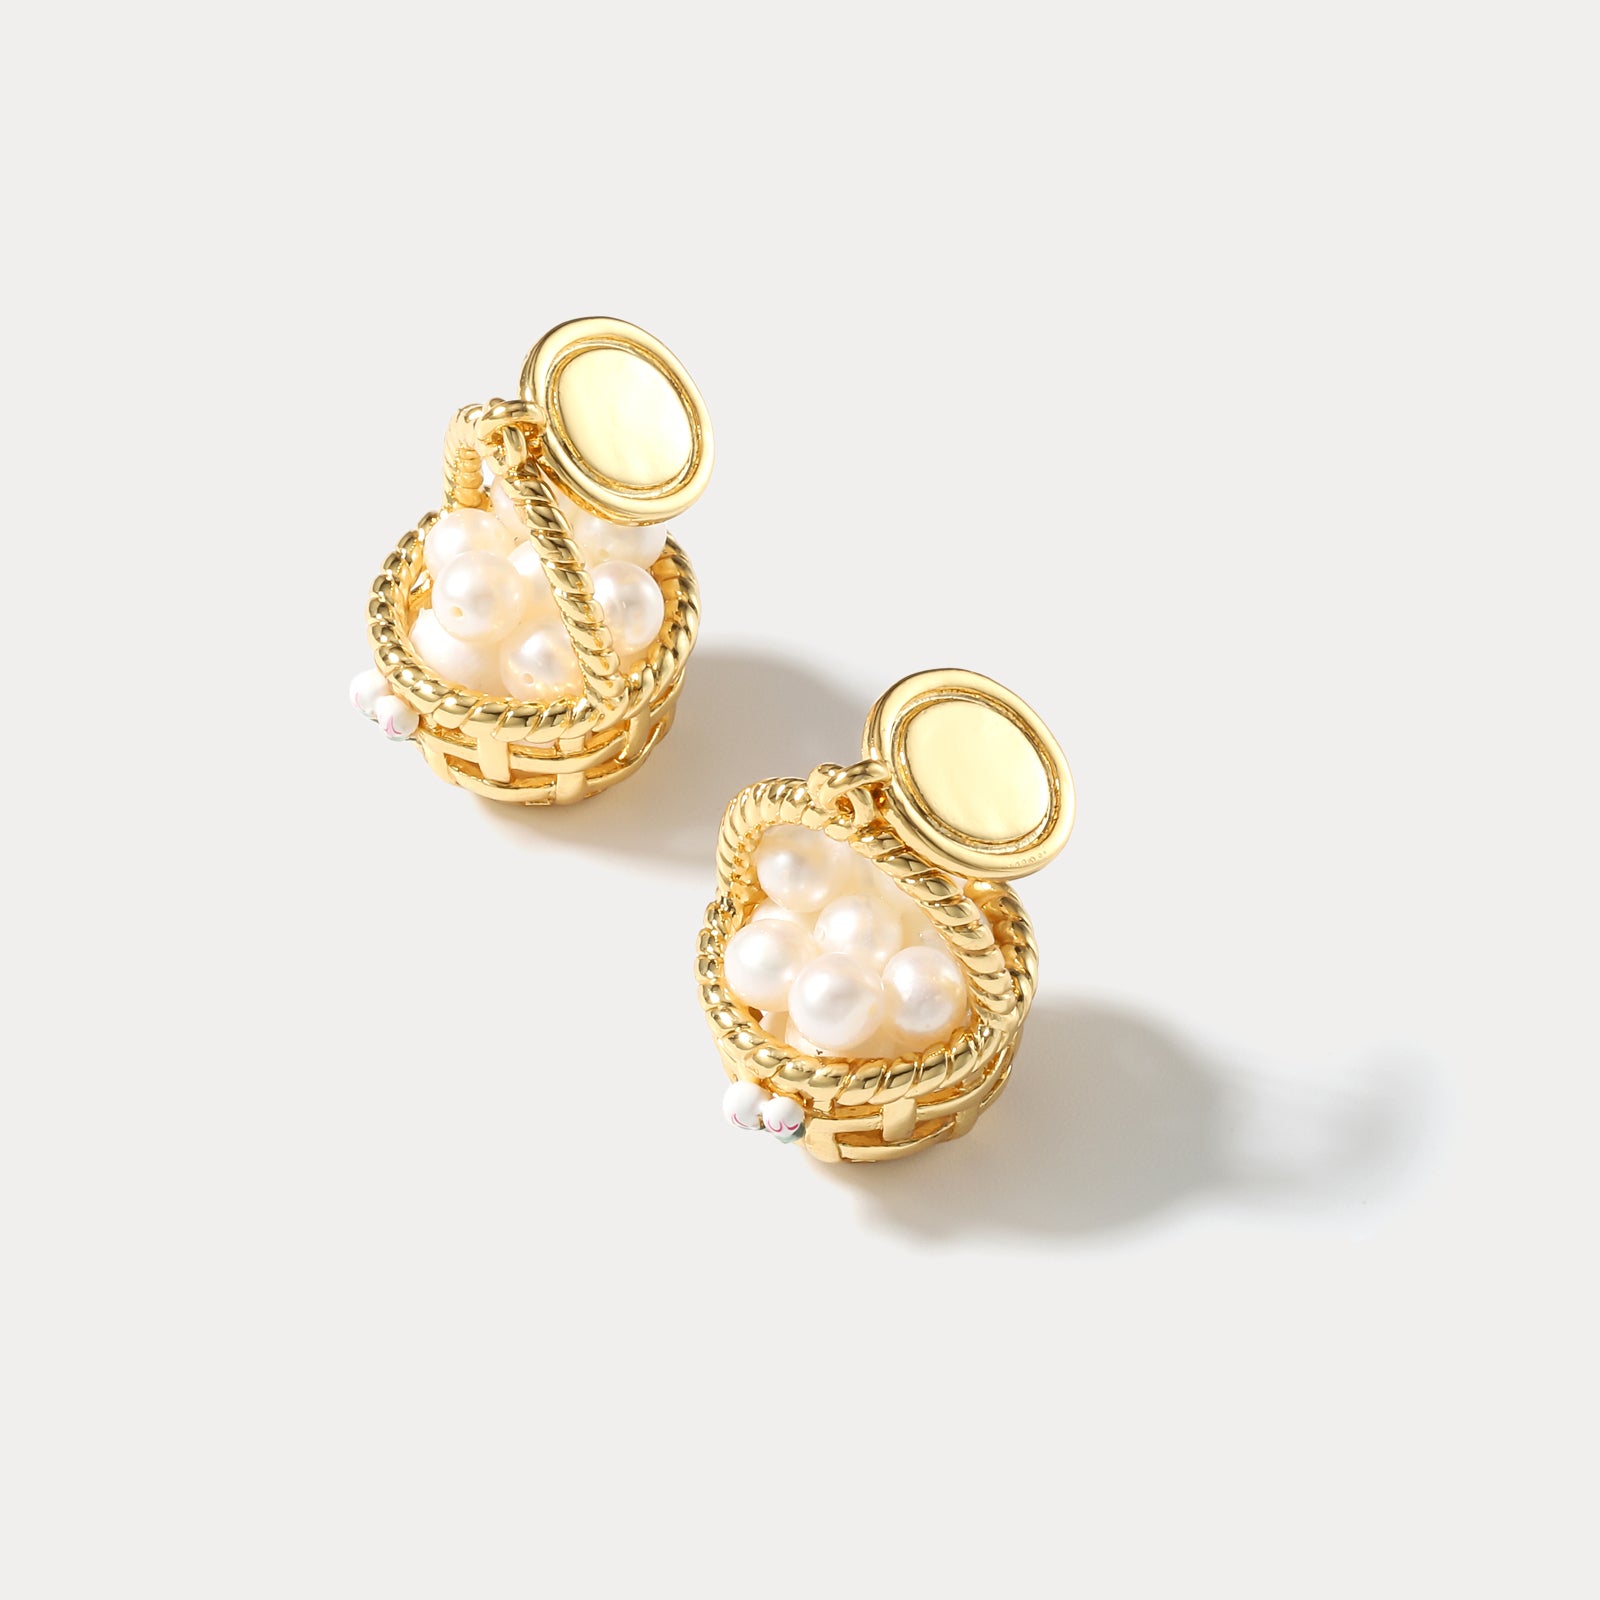 Baskets of Pearls Earrings Gift for Friend